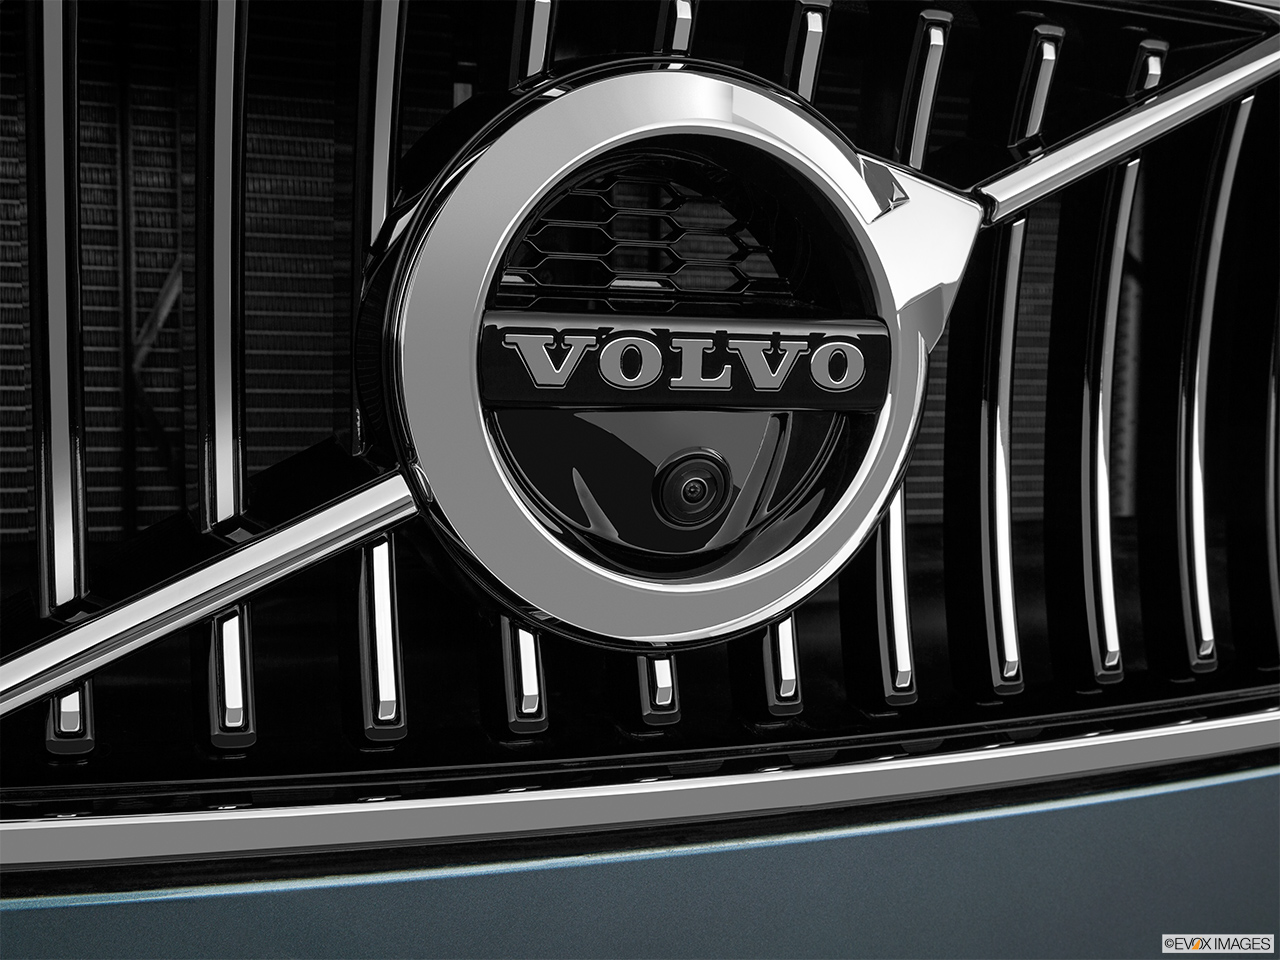 2020 Volvo S90 T6 Inscription Exterior Bonus Shots (no set spec) 